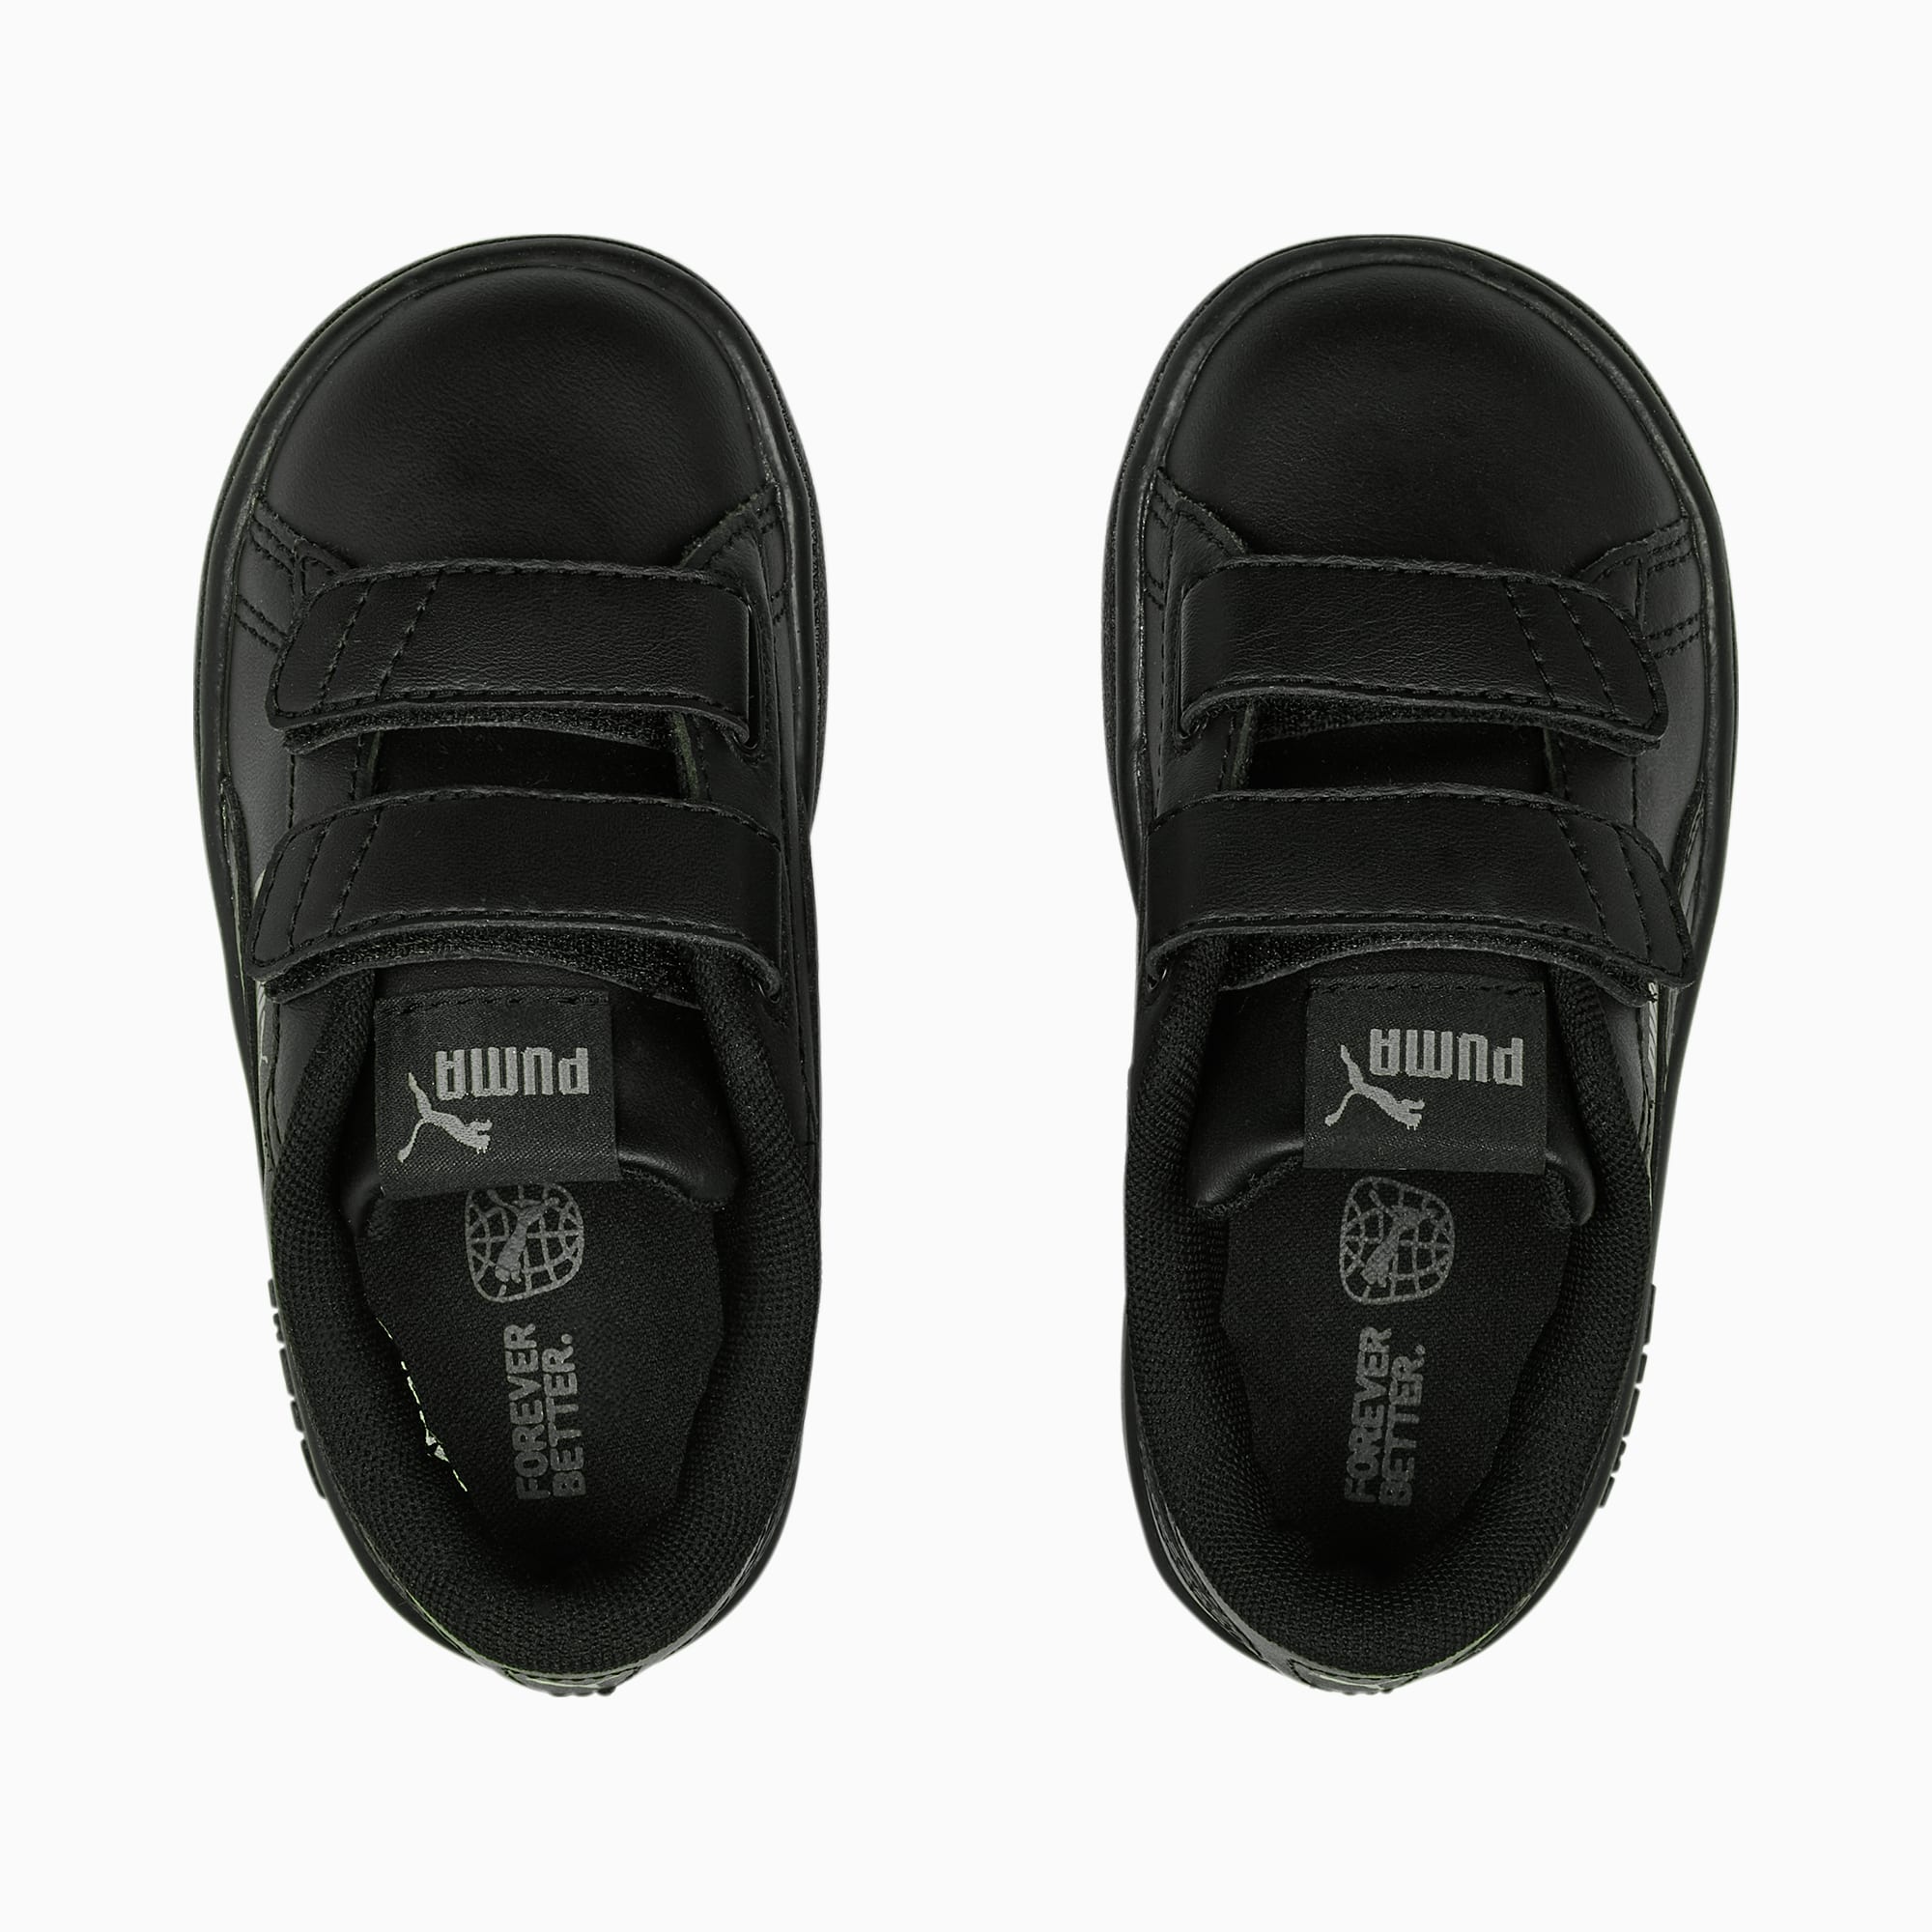 PUMA Zapatillas Para Bebés Smash 3.0 Leather V, Gris/Negro